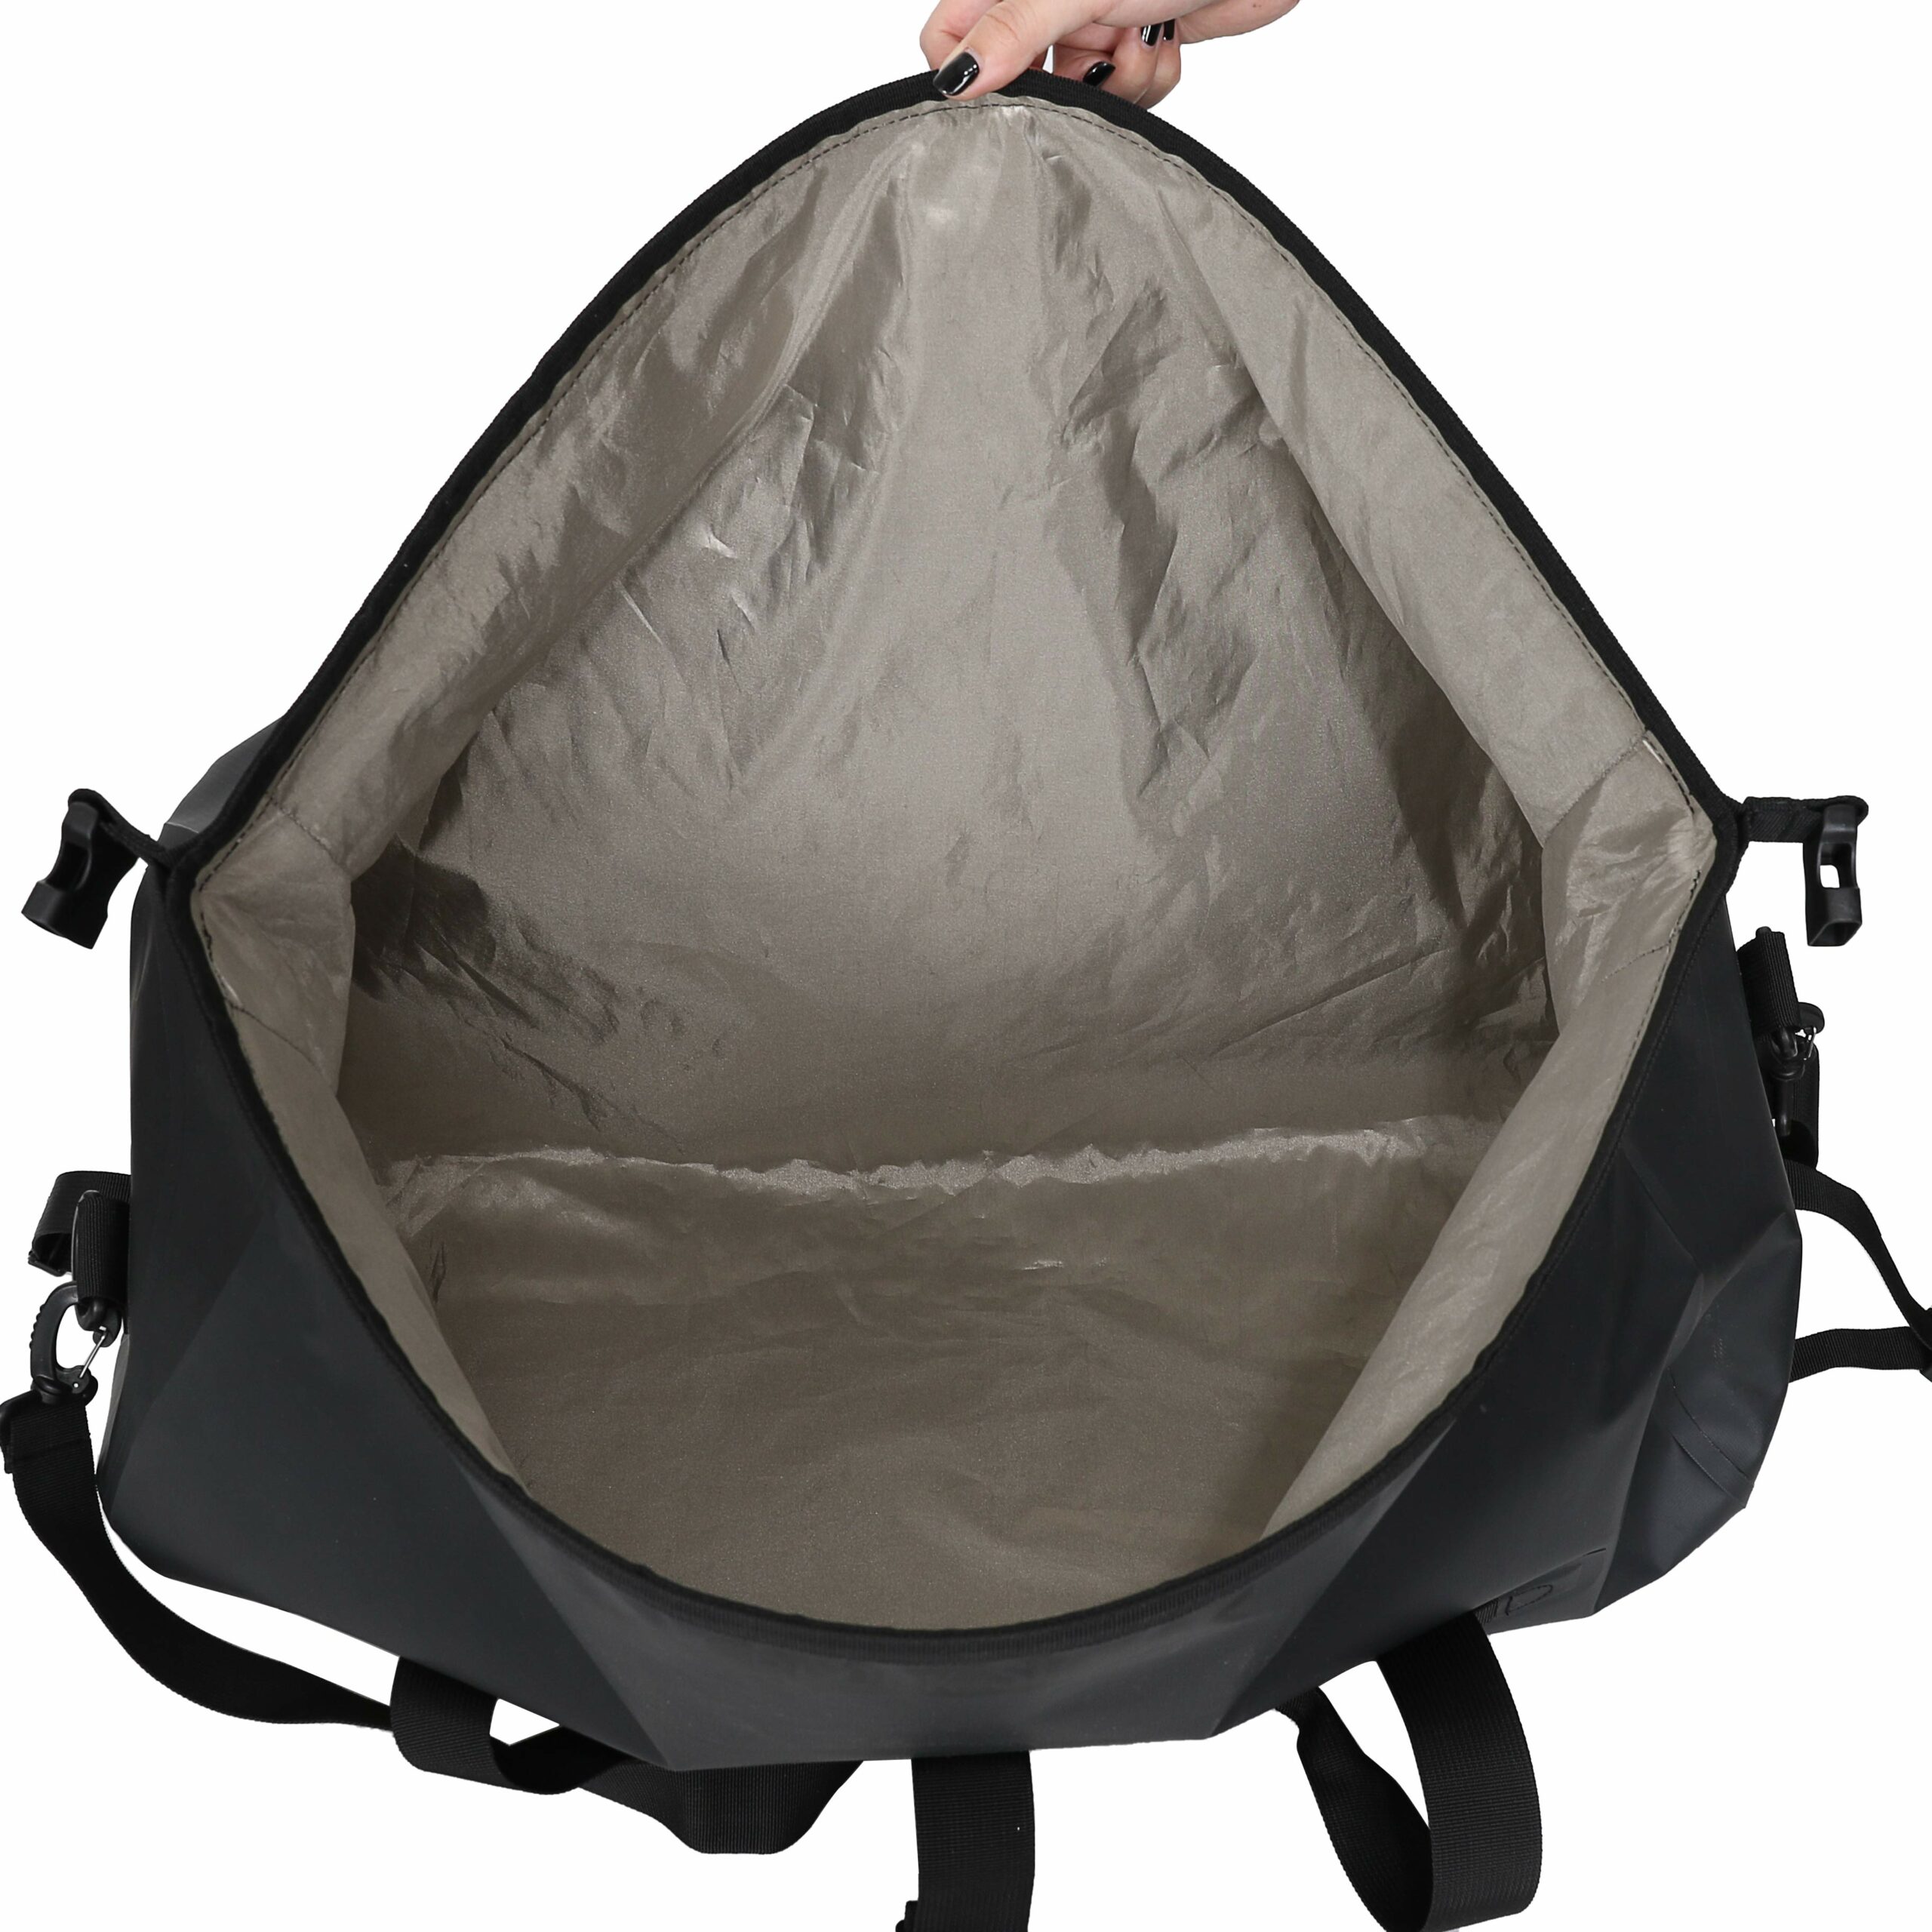 GoDark Faraday Bags EMP Proof - Survival Supplies Australia